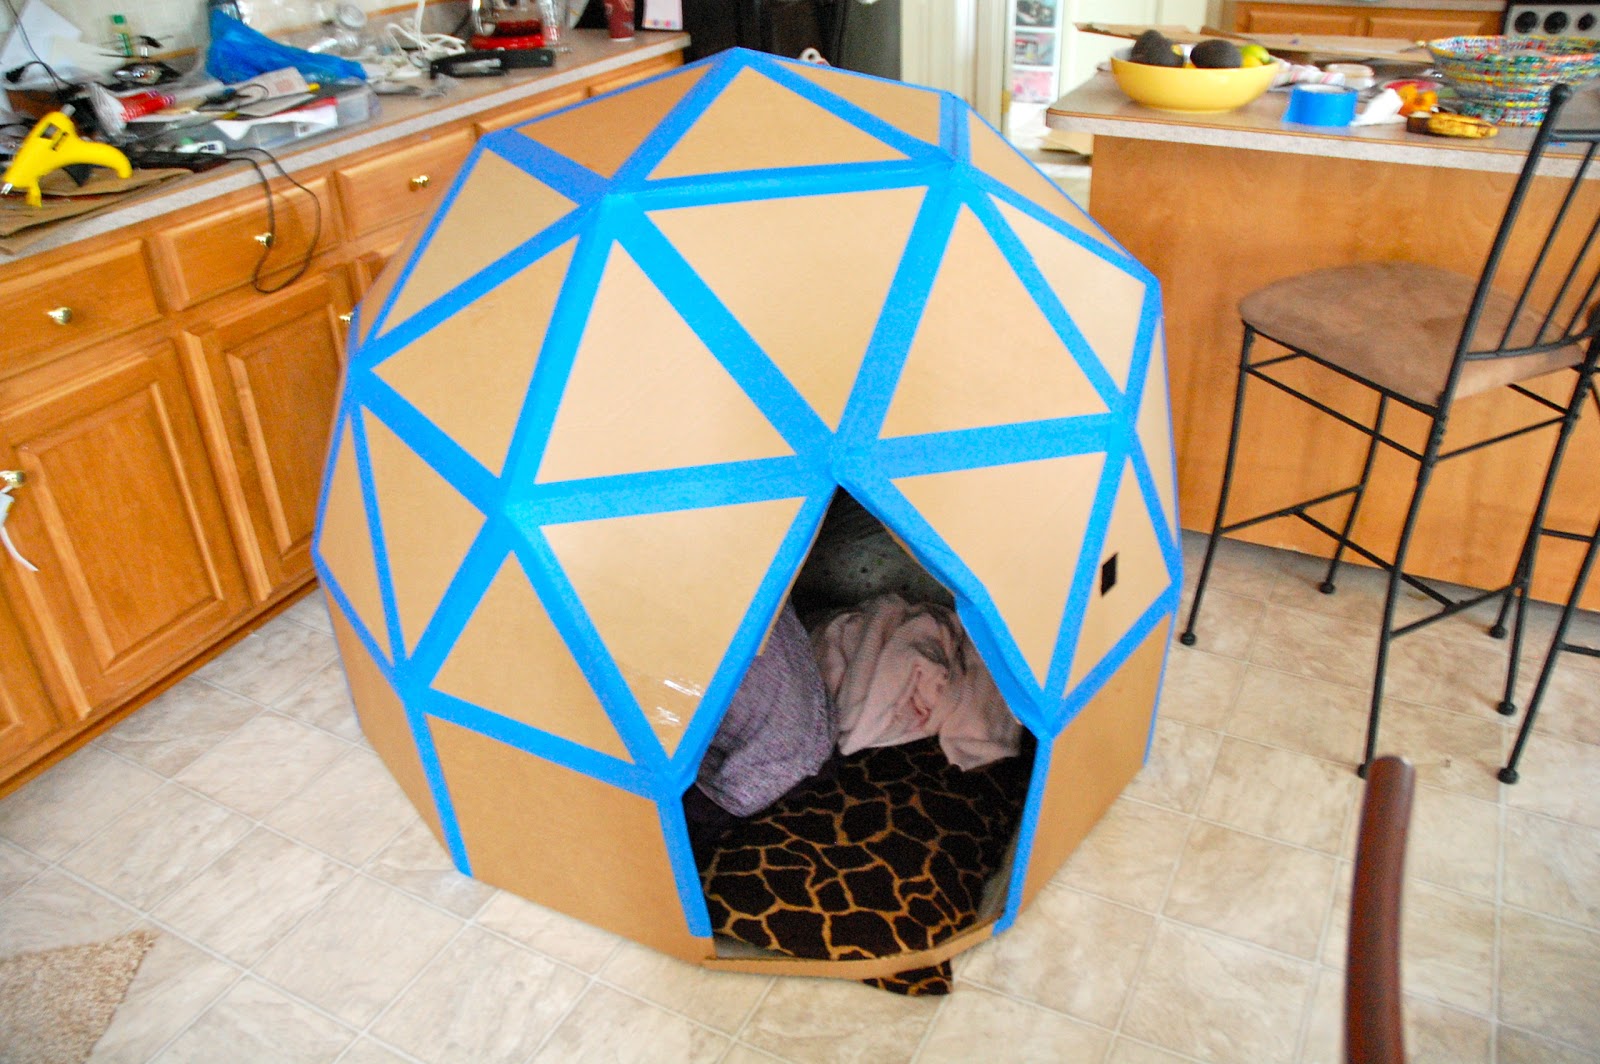 Totally Rad Cardboard Dome